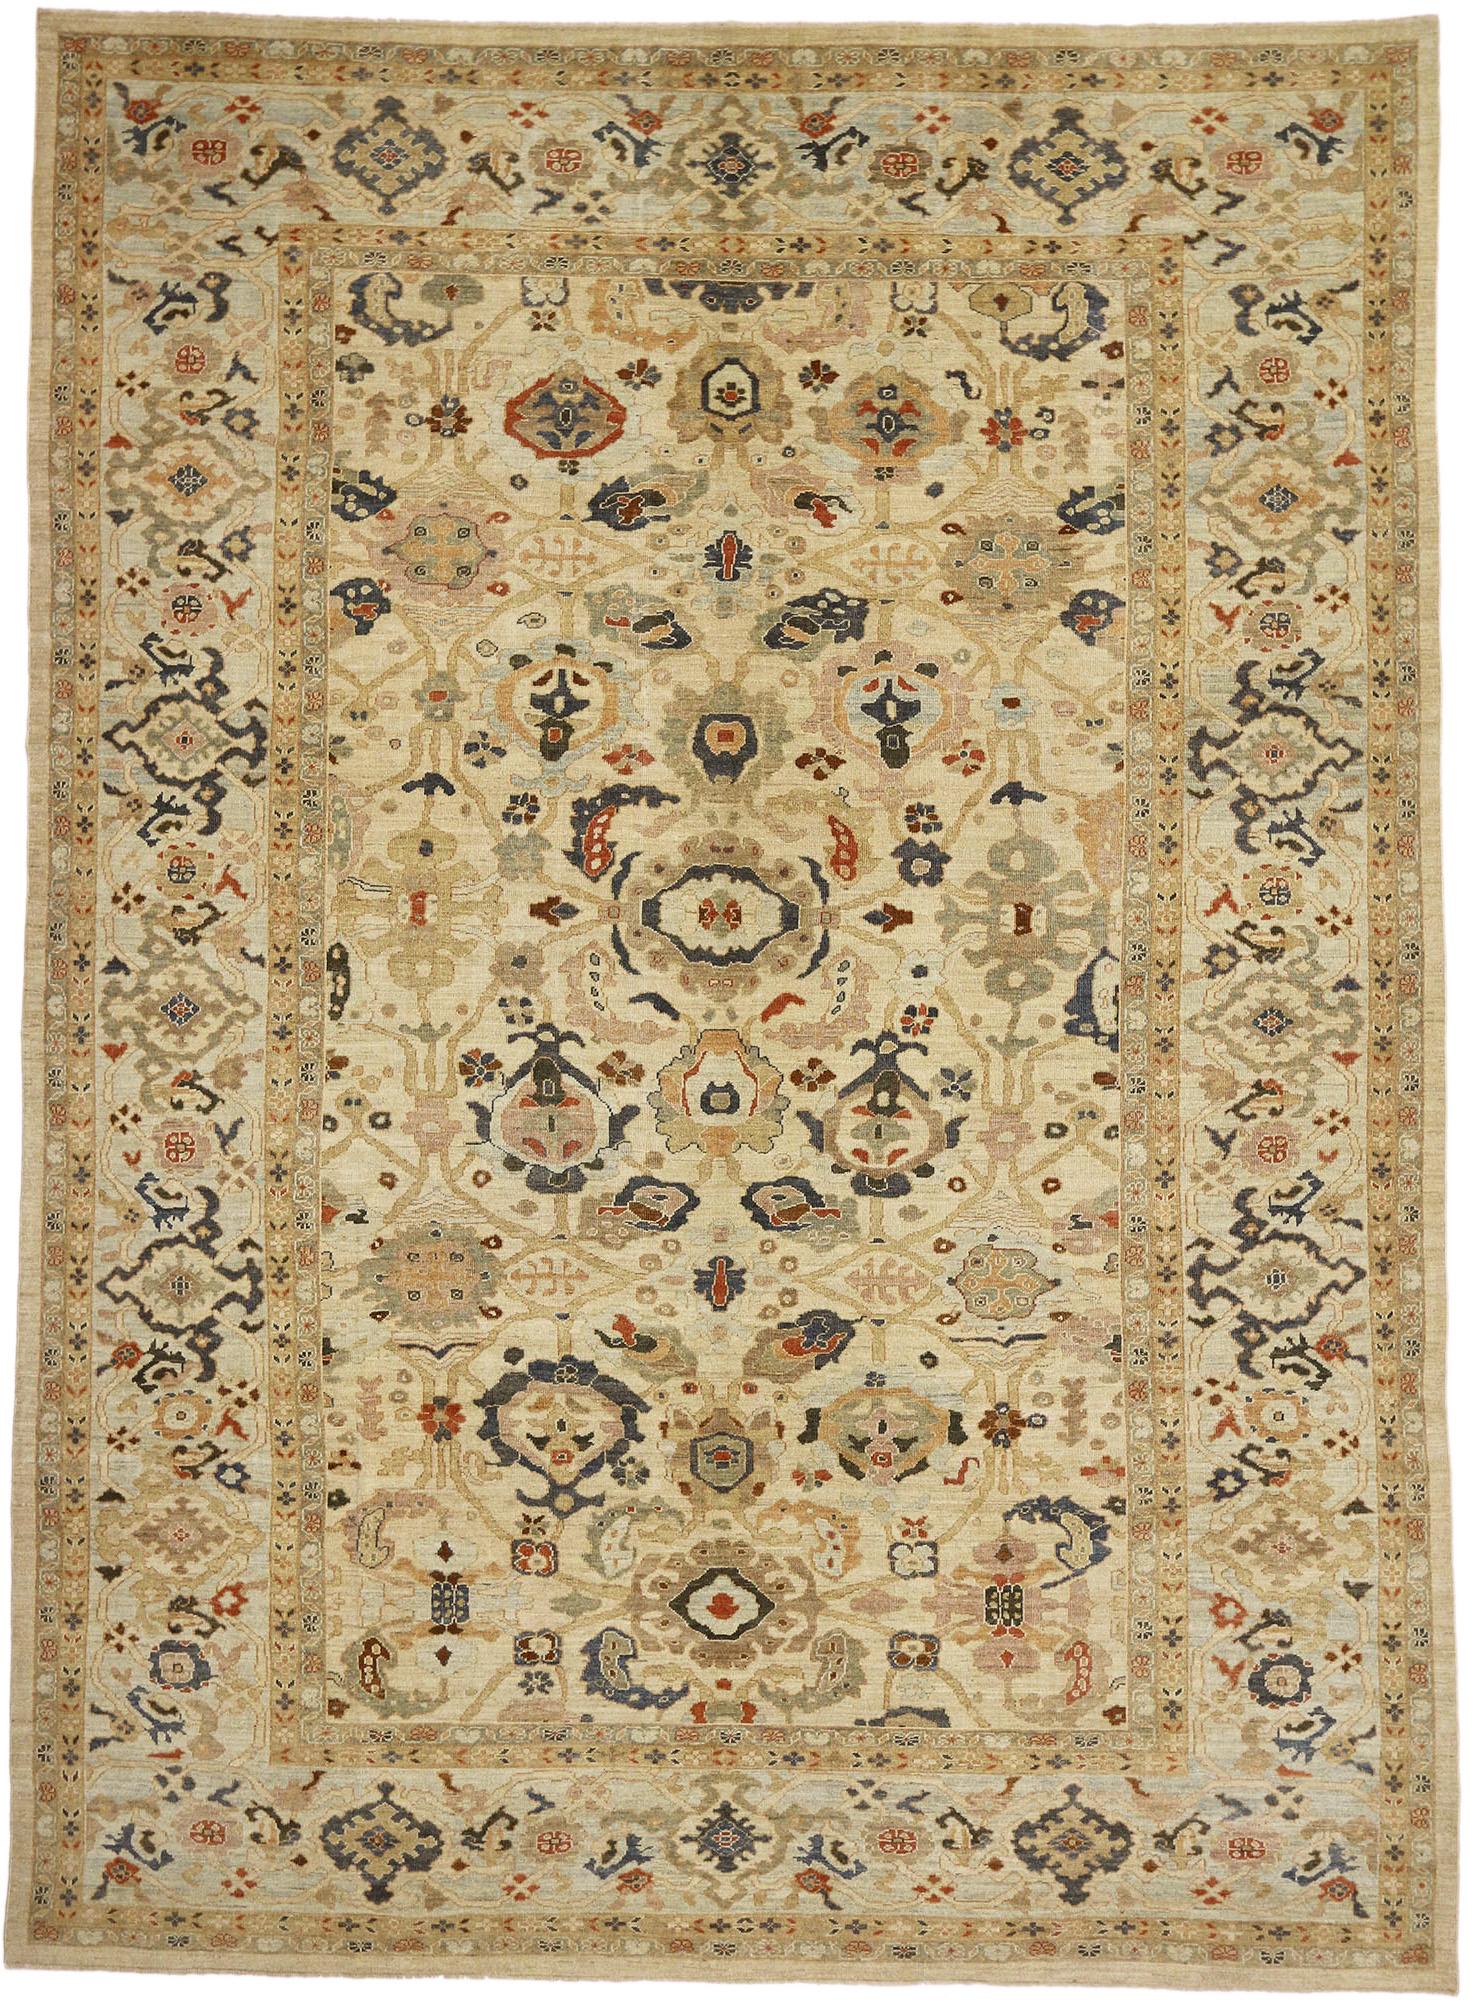 Contemporary Persian Sultanabad Carpet In New Condition For Sale In Dallas, TX